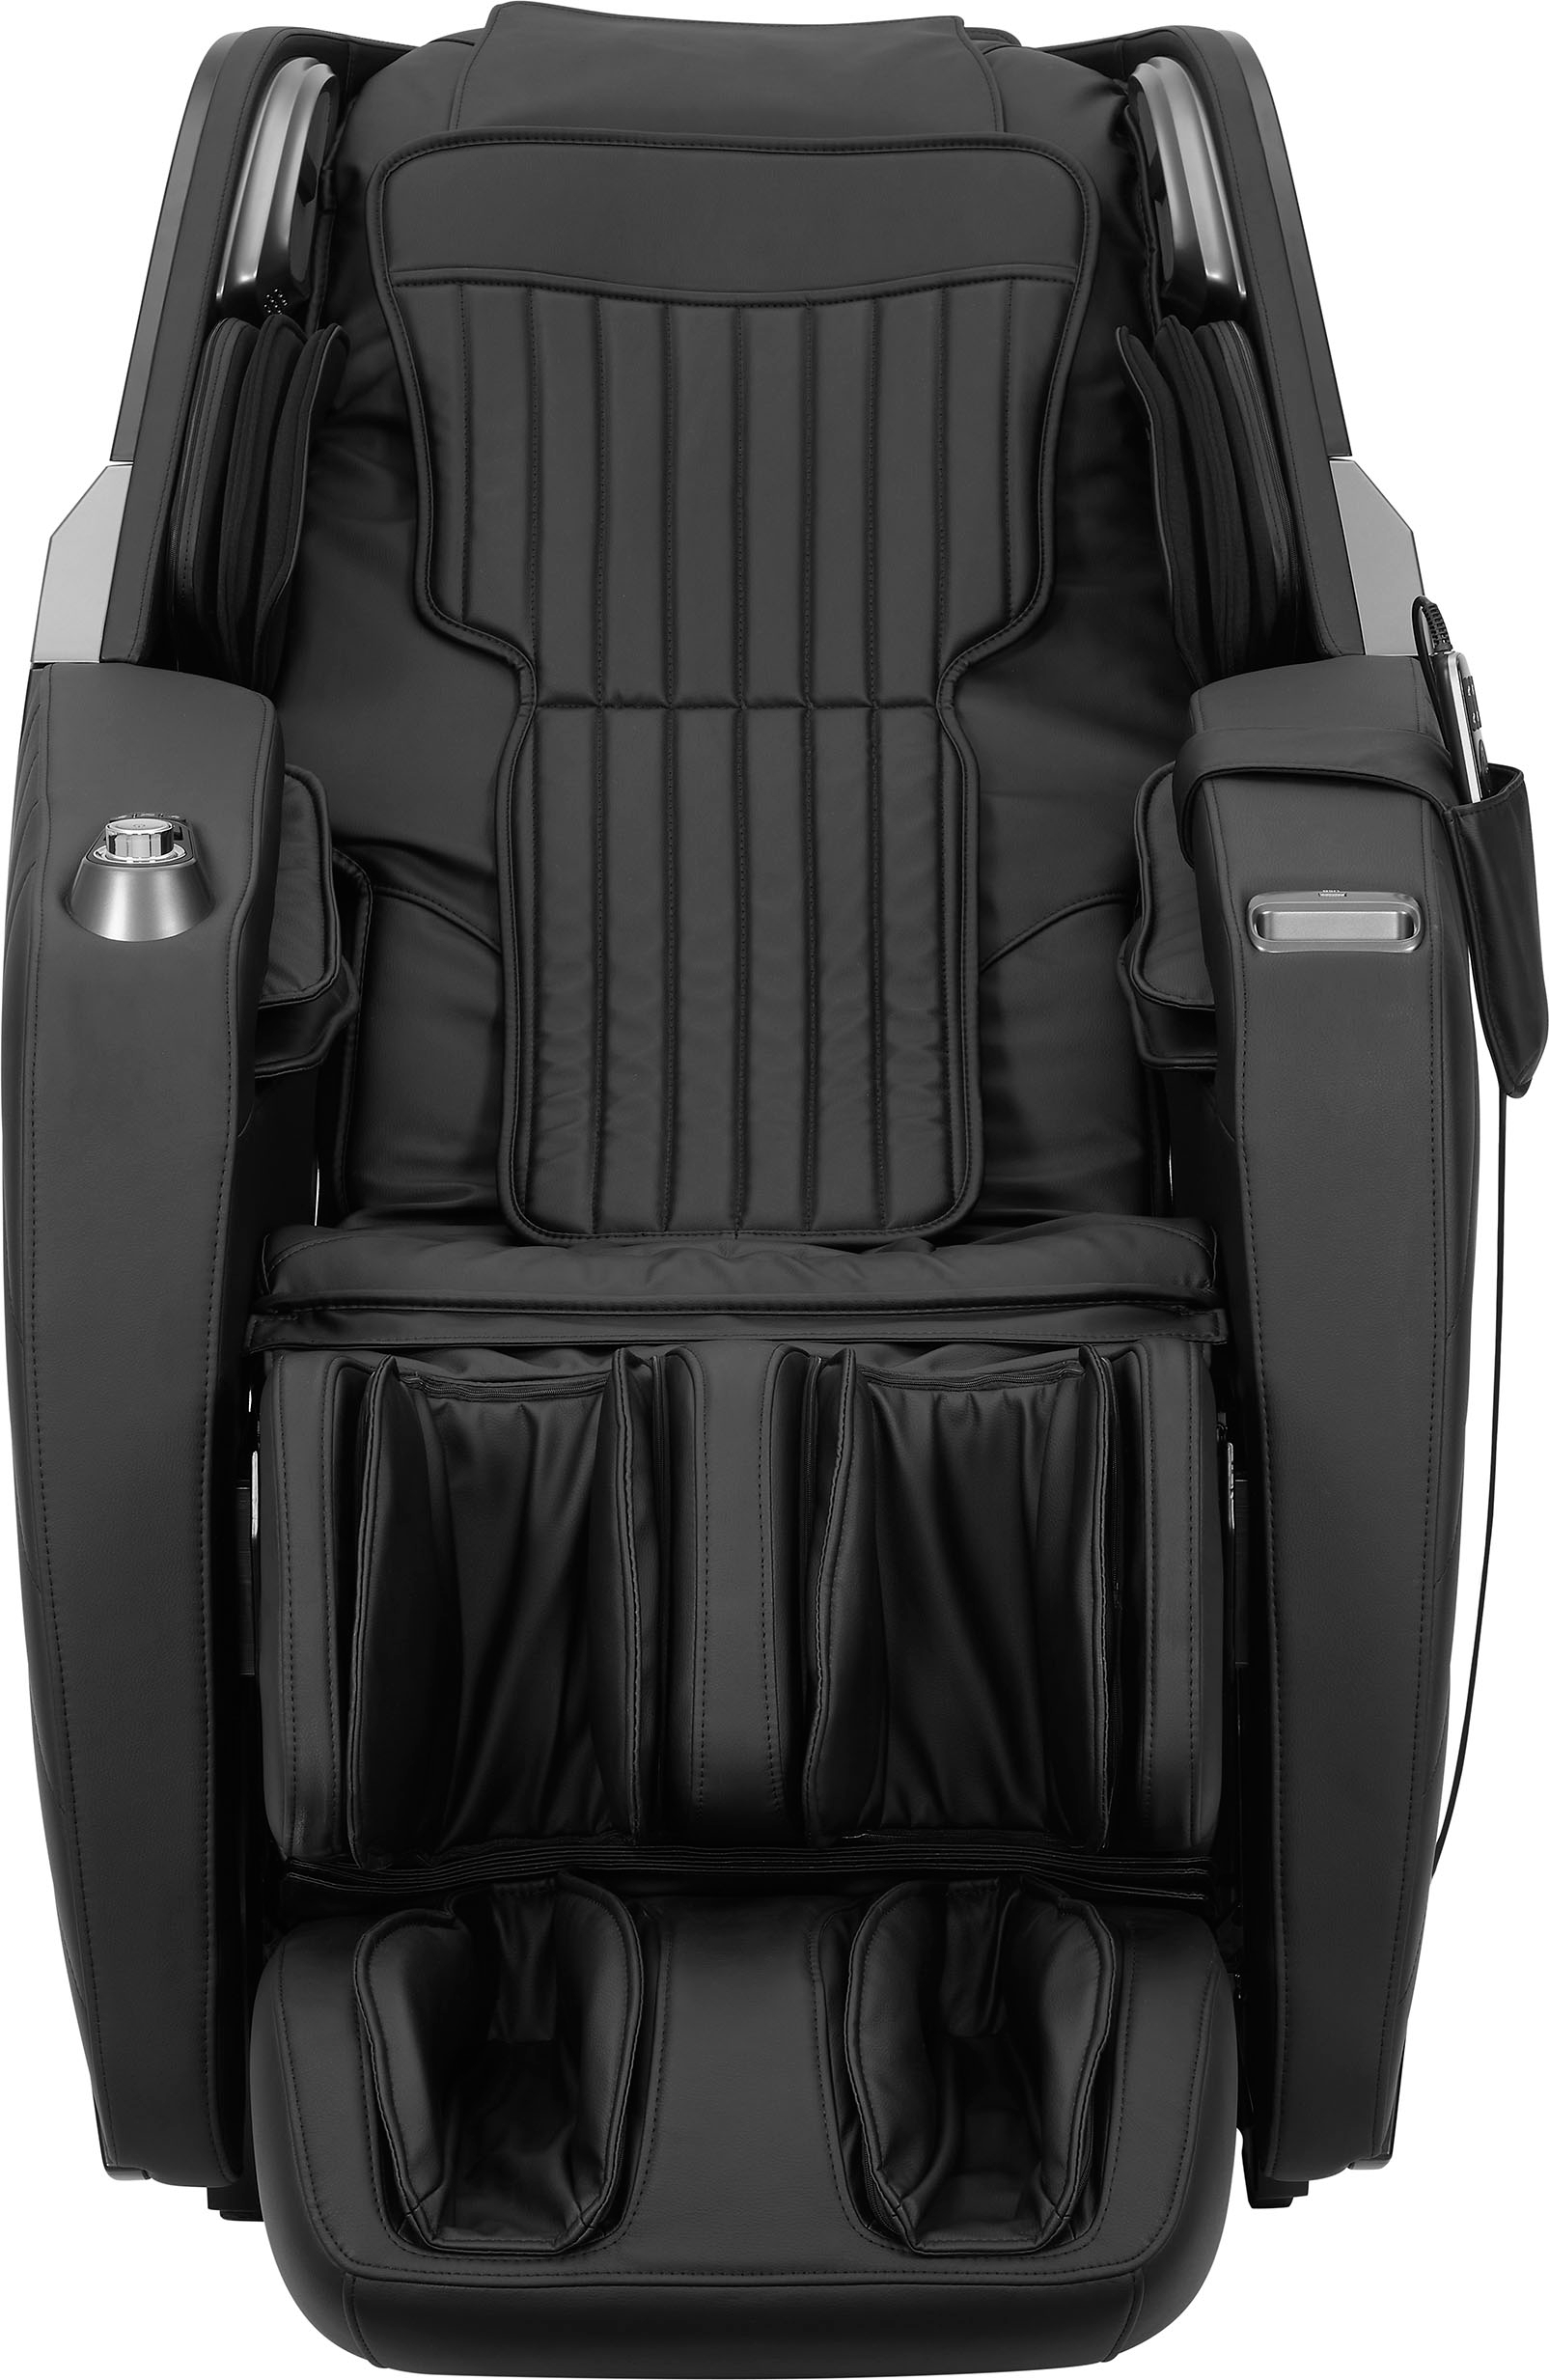 Insignia™ 3D Zero Gravity Full Body Massage Chair Black NS-MGC600BK2 - Best  Buy